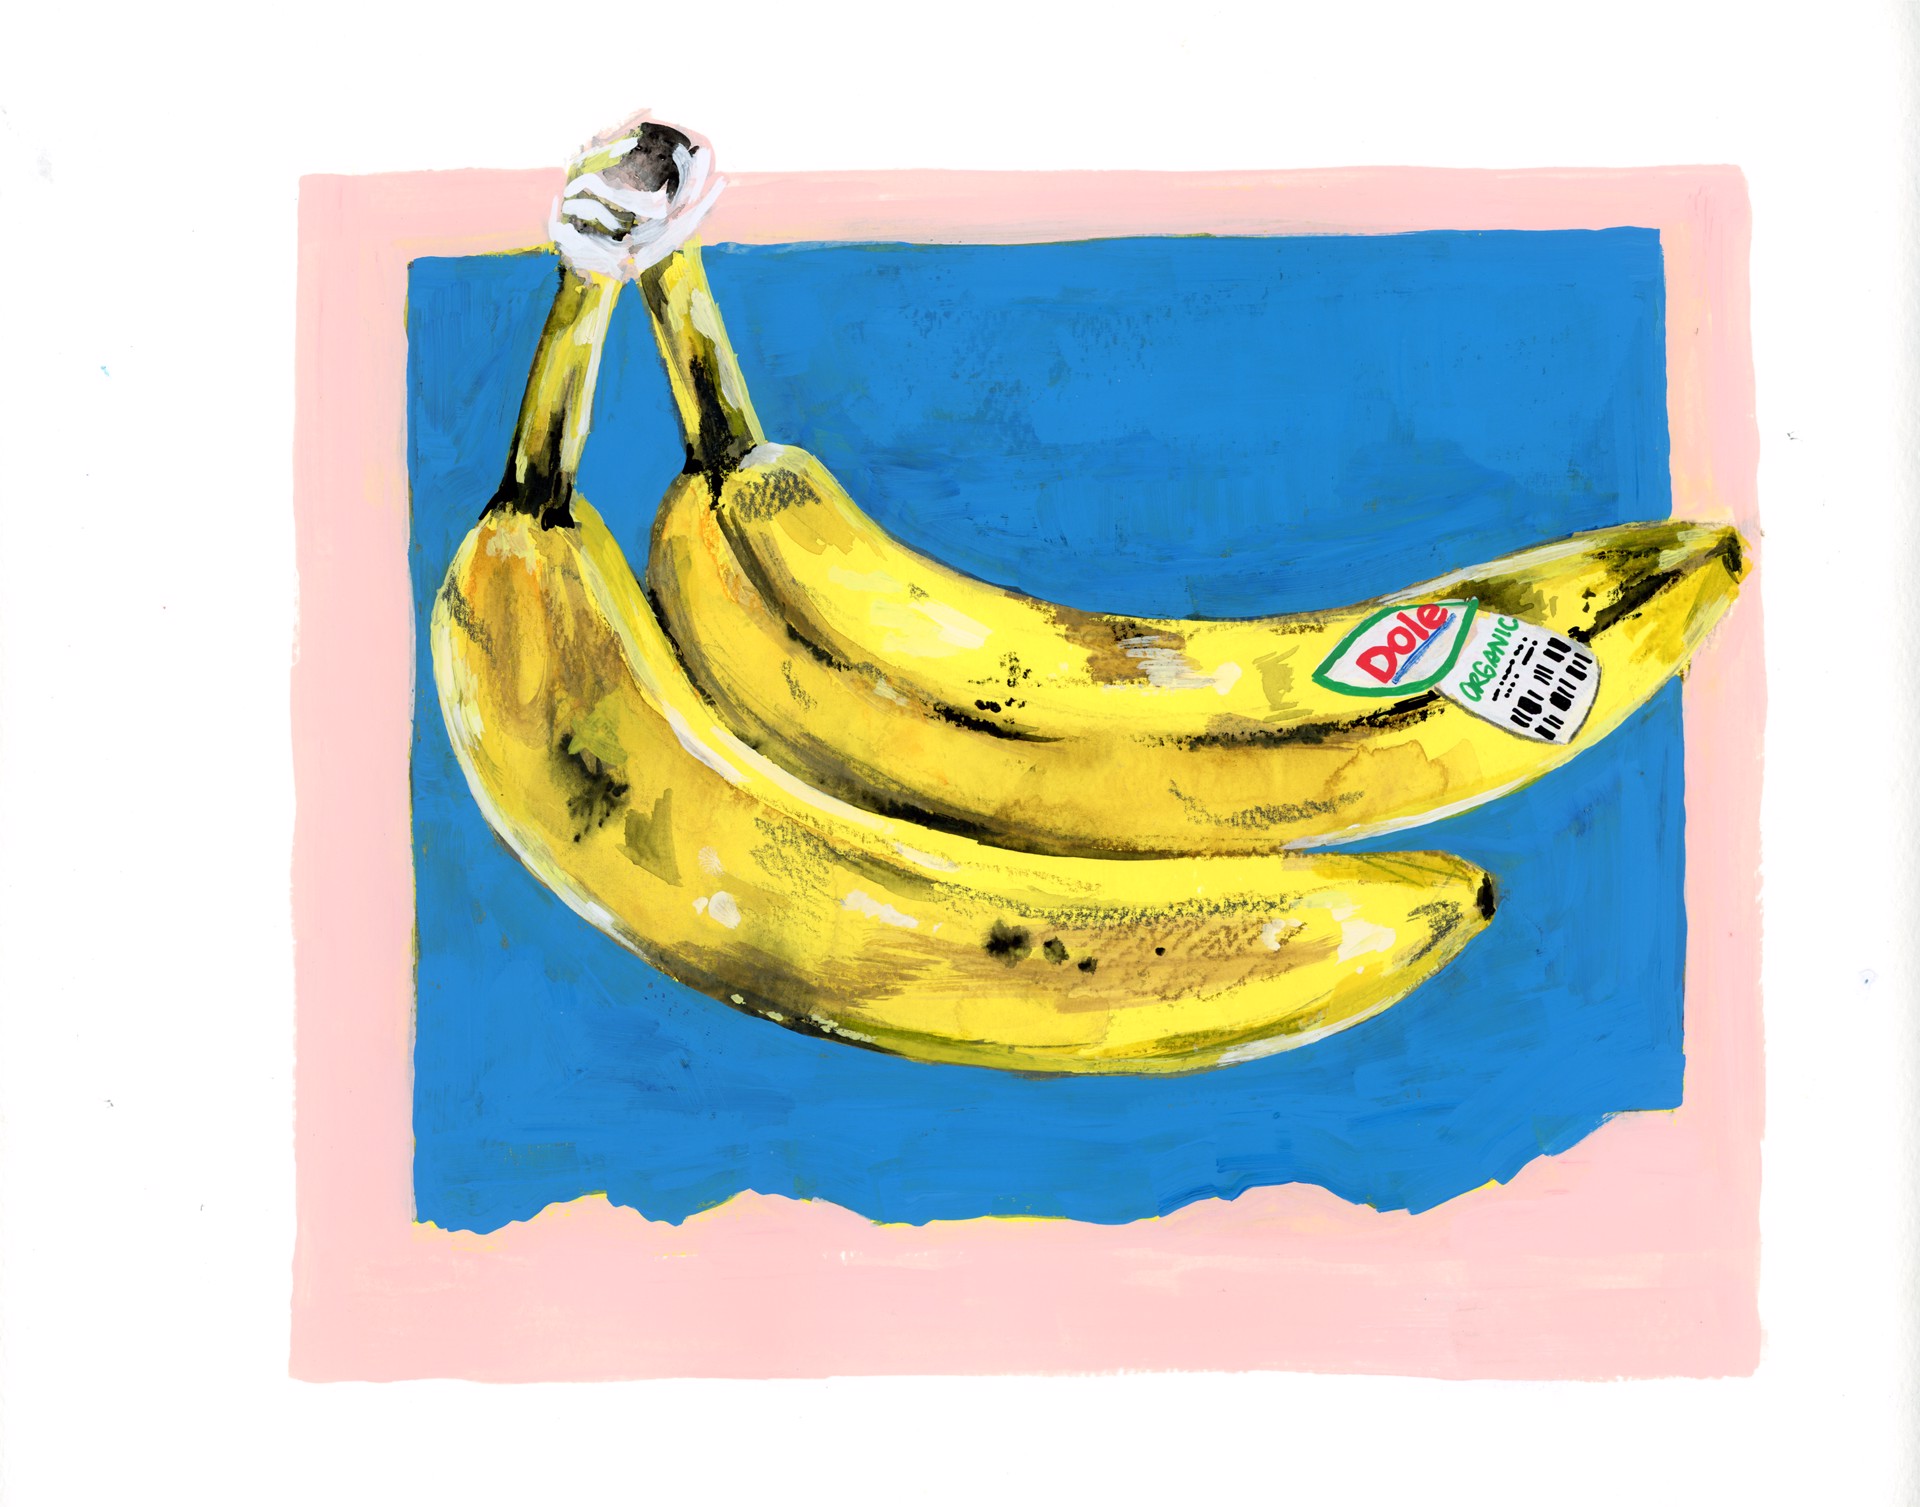 Dole Banana by Rachael Nerney